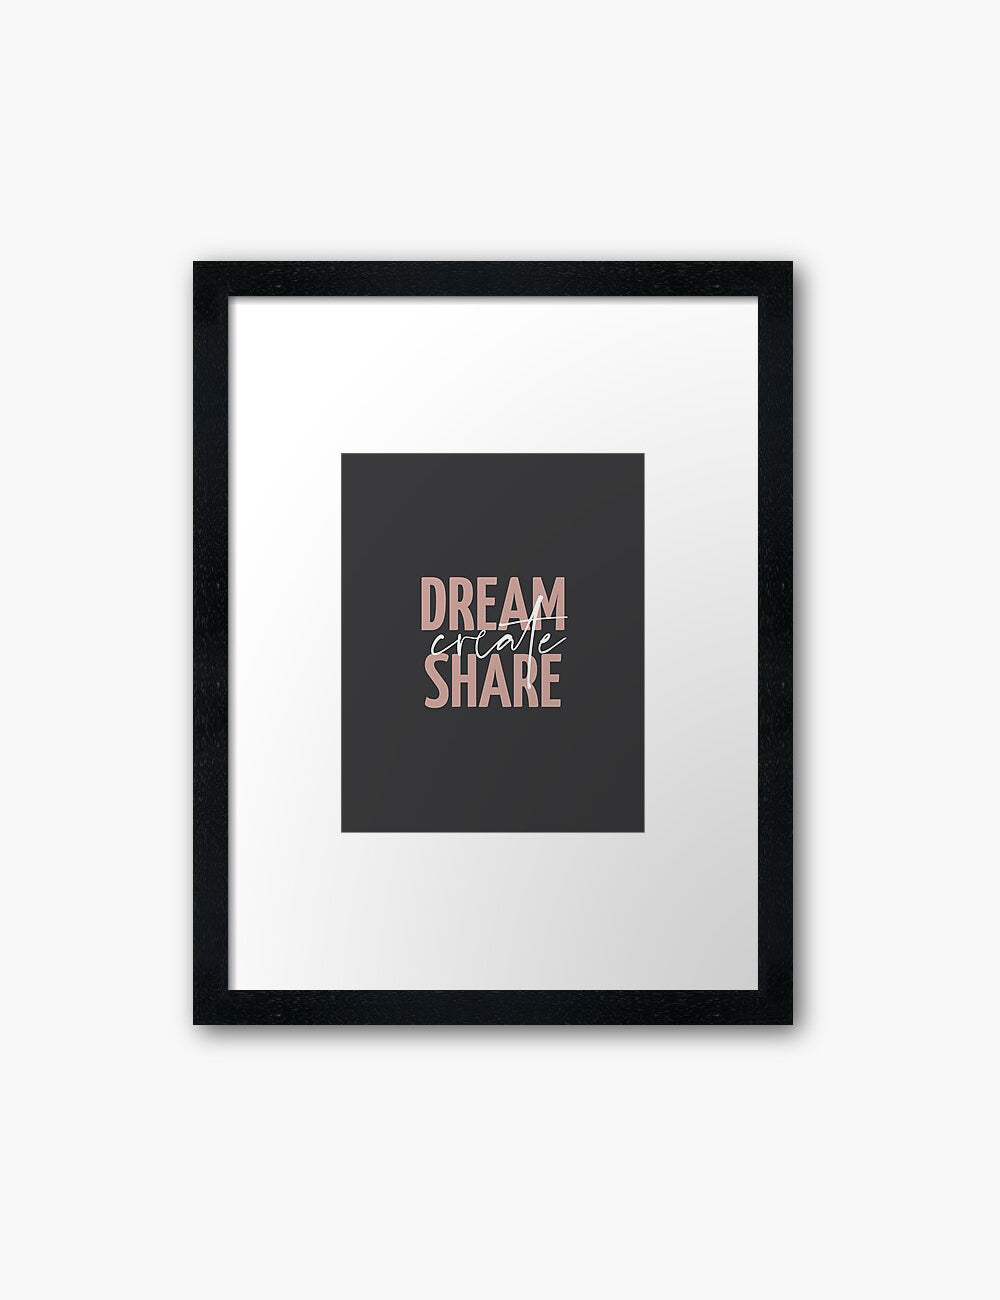 DREAM. CREATE. SHARE. Blush. Rose. Pale Red. Dark Grey. Black. Printable Wall Art Quote. - PAPER MOON Art & Design